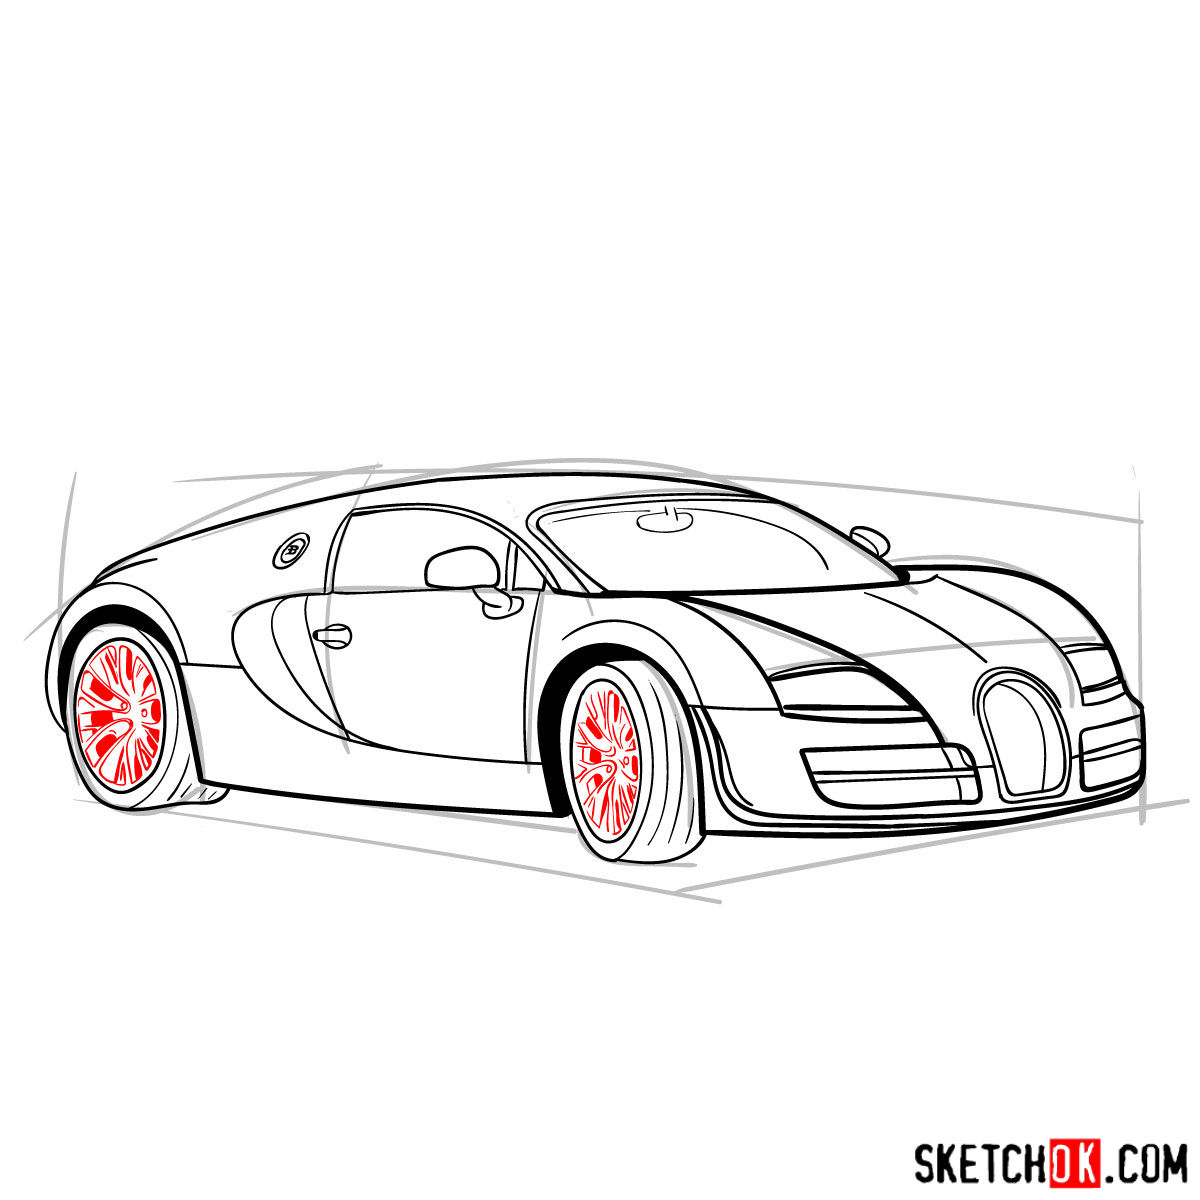 How to draw Bugatti Veyron 16.4 Super Sport - step 12